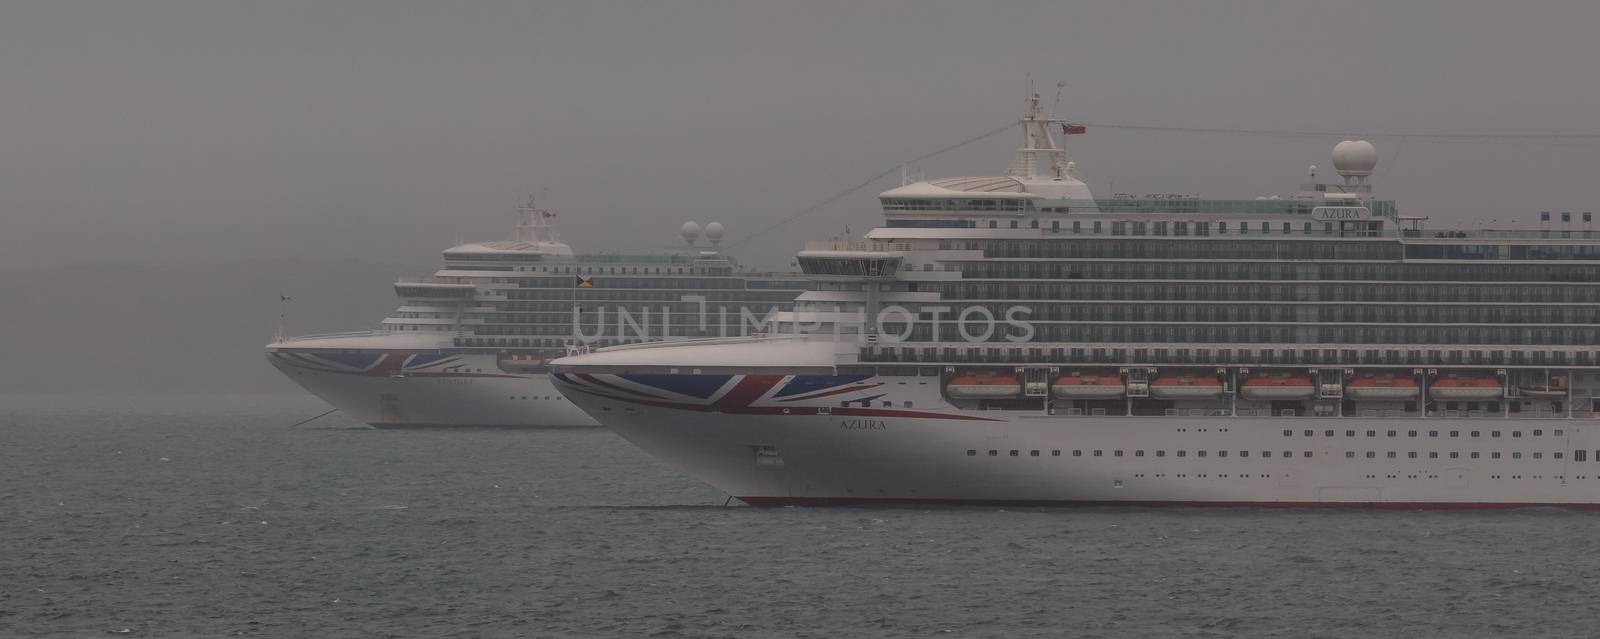 P&O cruise ships Azura, Britannia in Weymouth Bay by DamantisZ